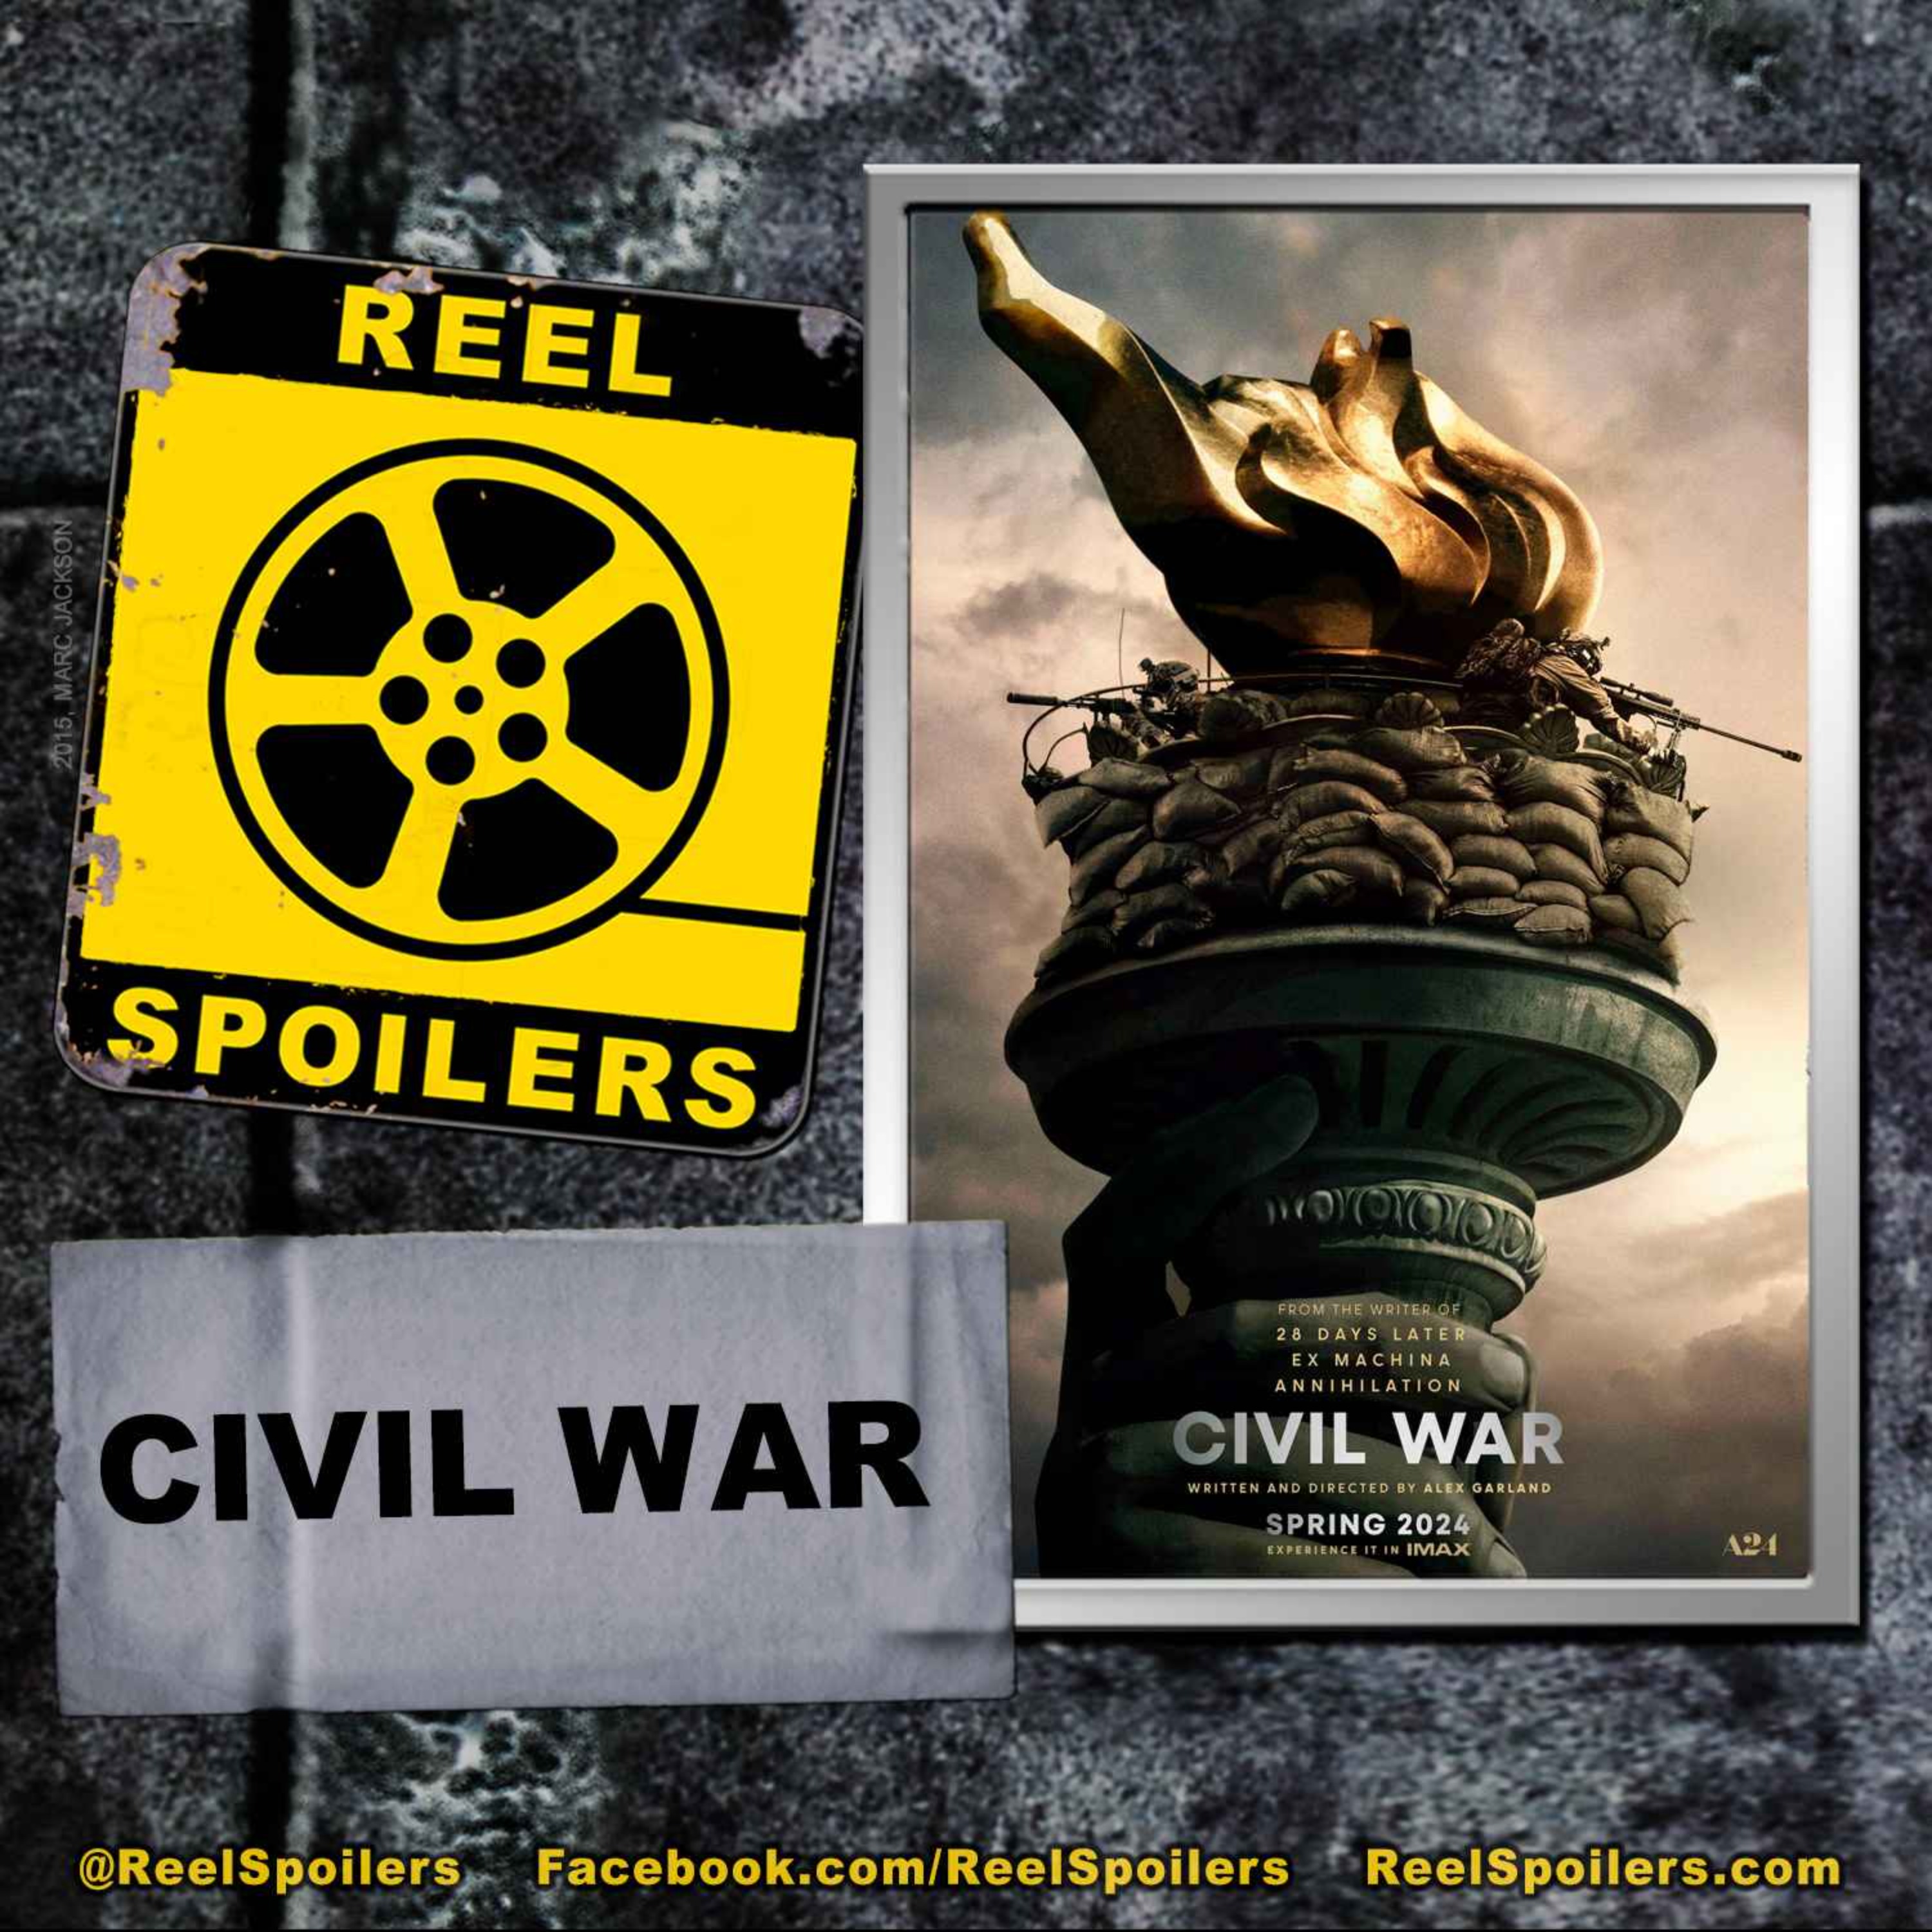 CIVIL WAR Starring Kirsten Dunst, Wagner Moura, Cailee Spaeny, Stephen McKinley Henderson